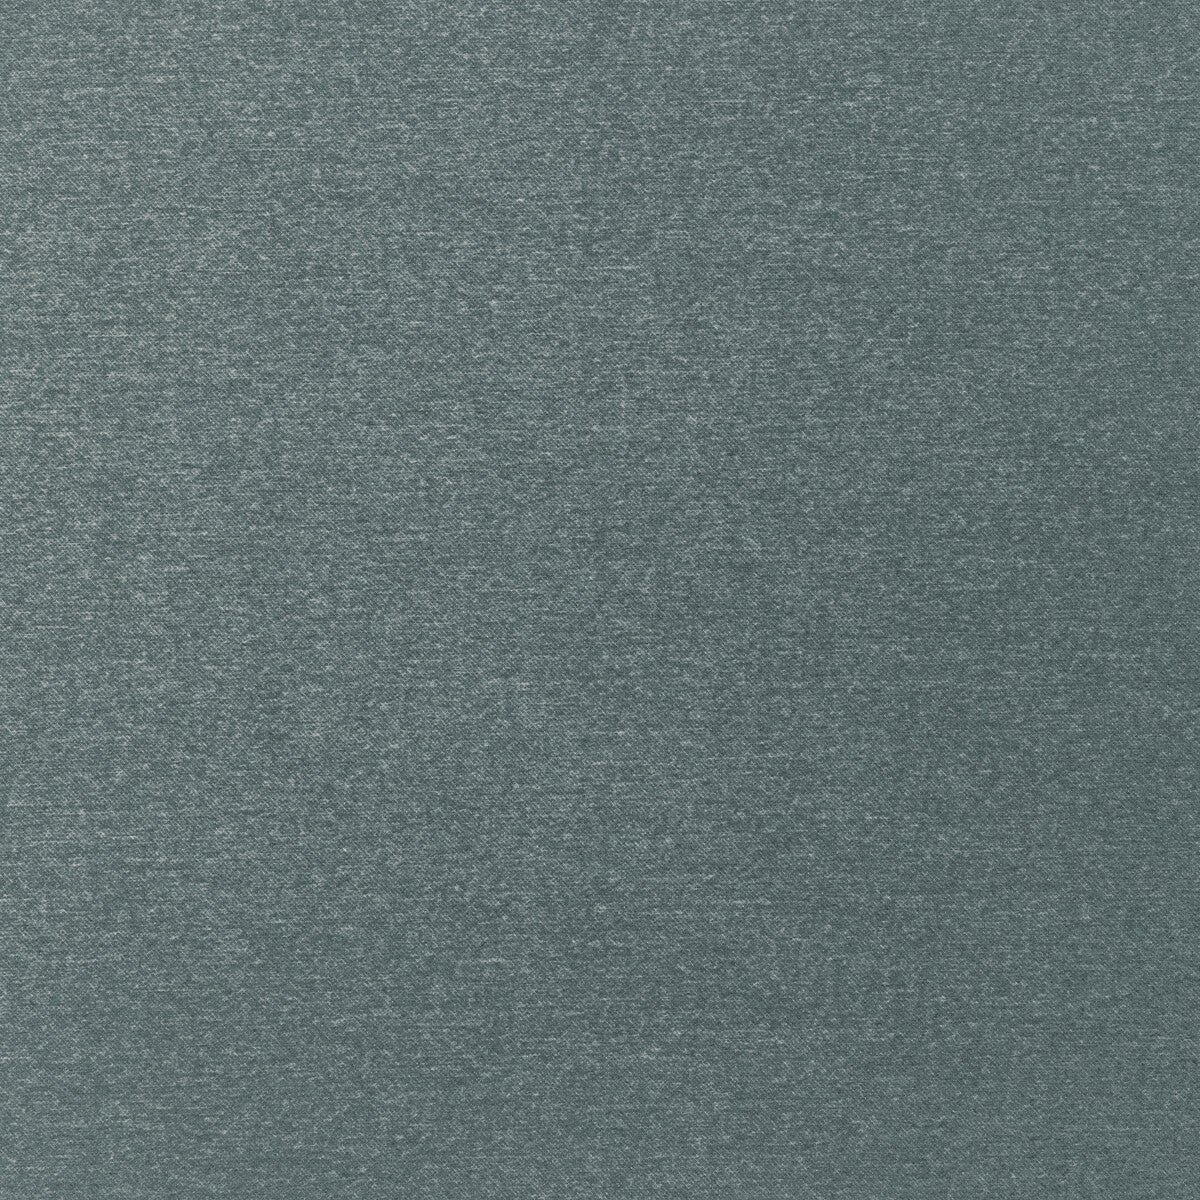 Kravet Smart fabric in 36110-511 color - pattern 36110.511.0 - by Kravet Smart in the Performance Kravetarmor collection